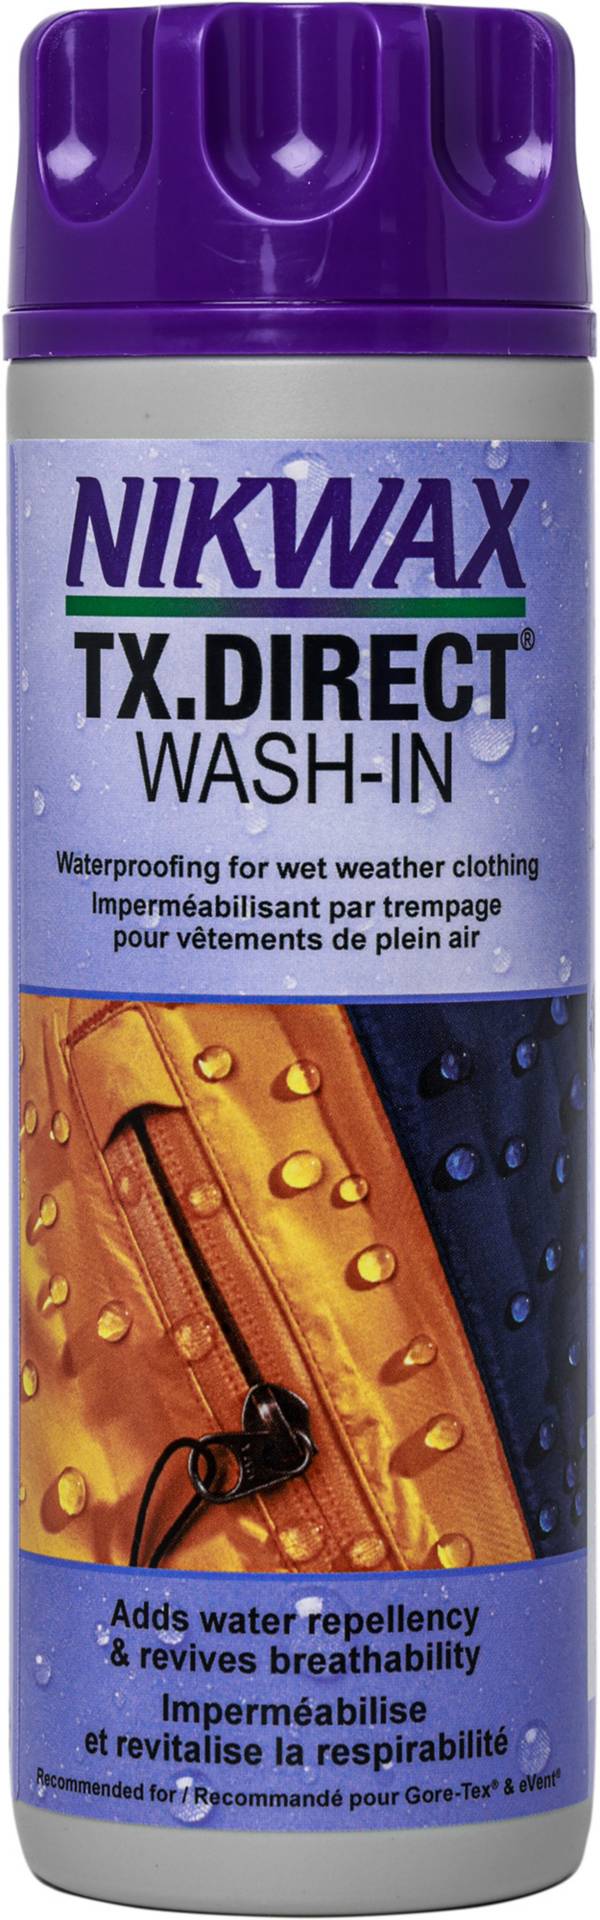 Nikwax Down Wash Direct 10 oz.